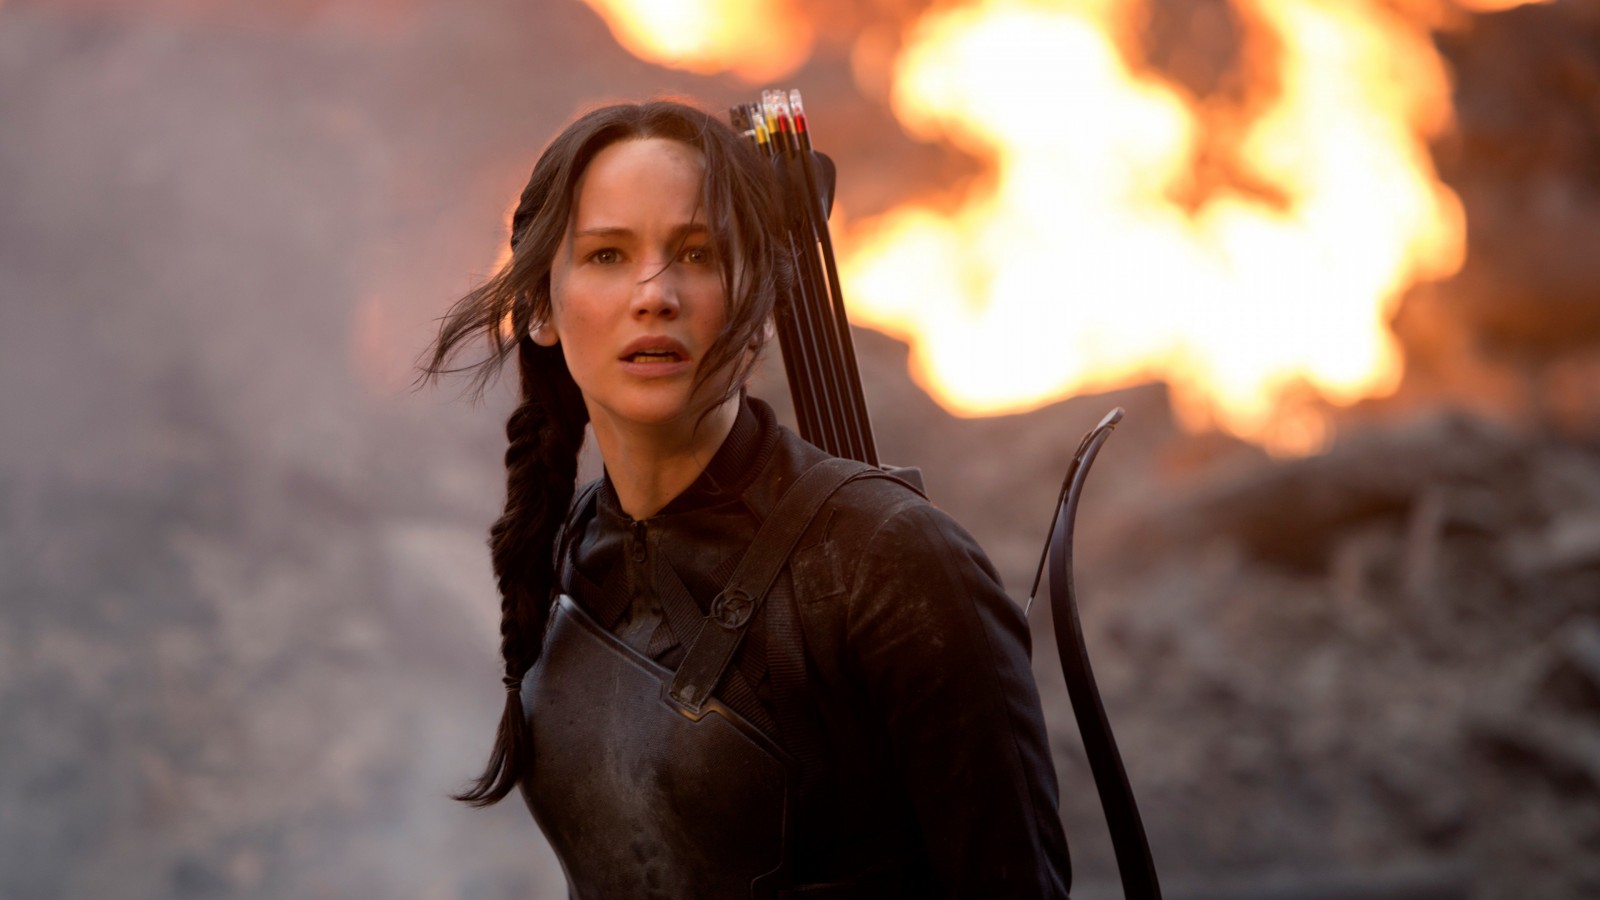 Jennifer Lawrence in The Hunger Games Wallpaper for Desktop 1600x900